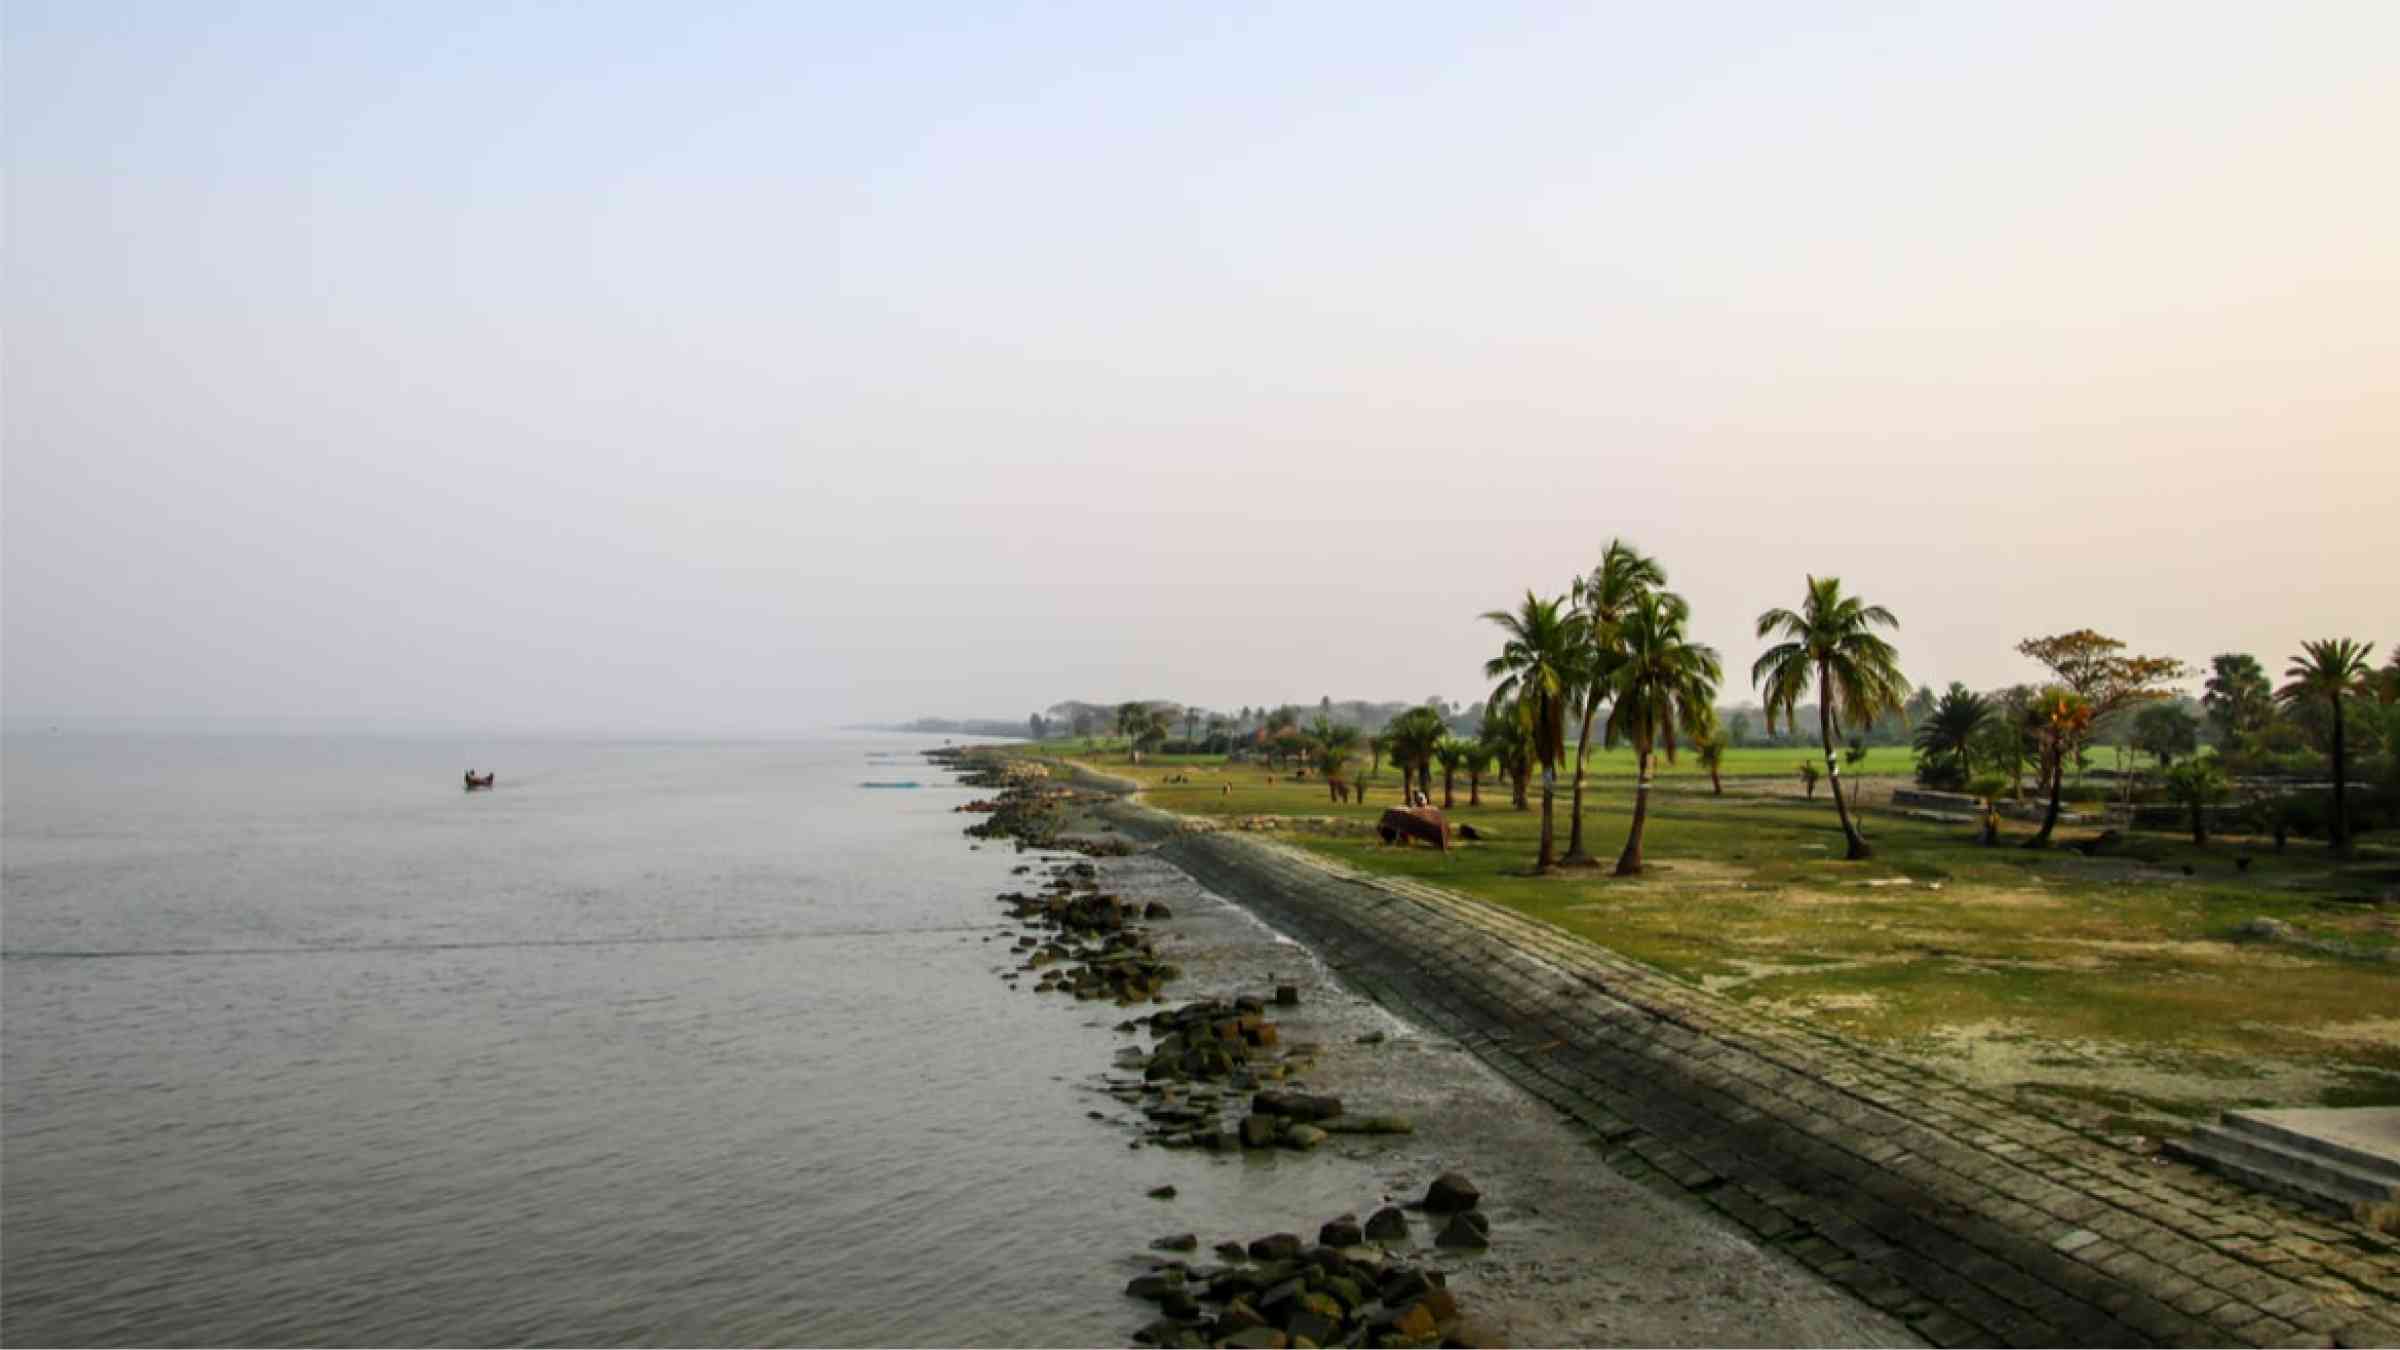 View of the Bangaldesh coast